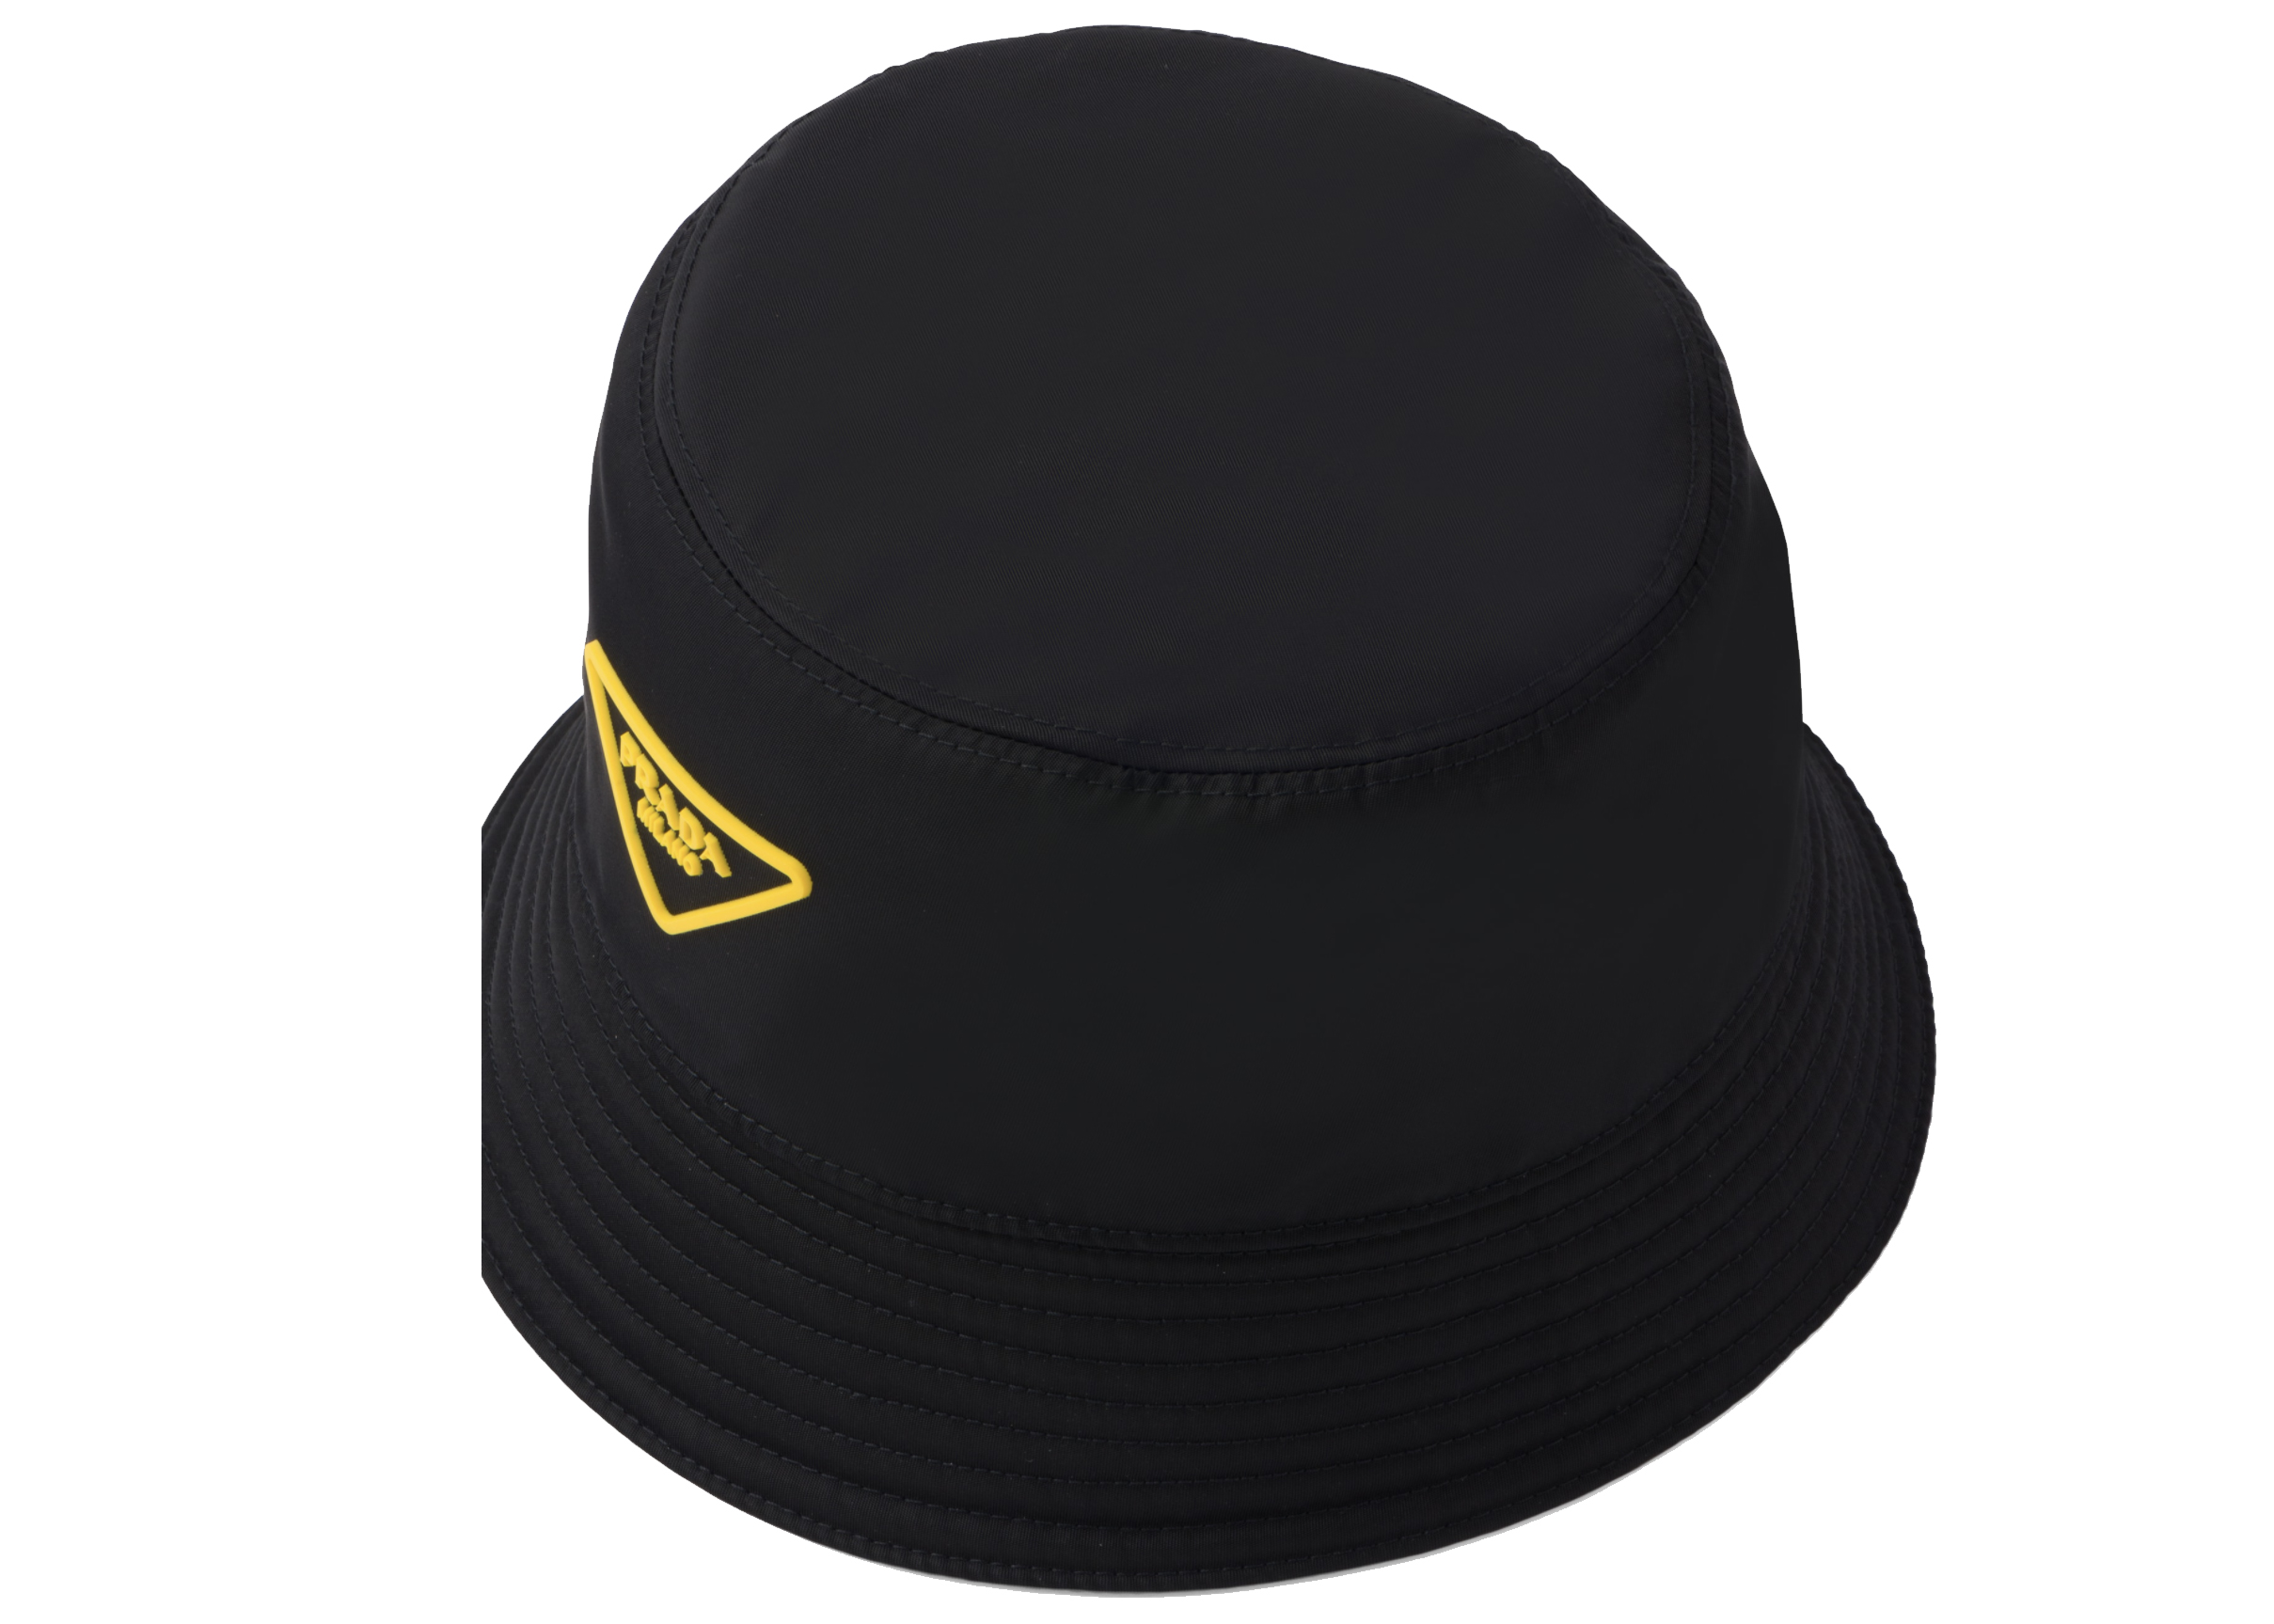 prada bucket hat yellow